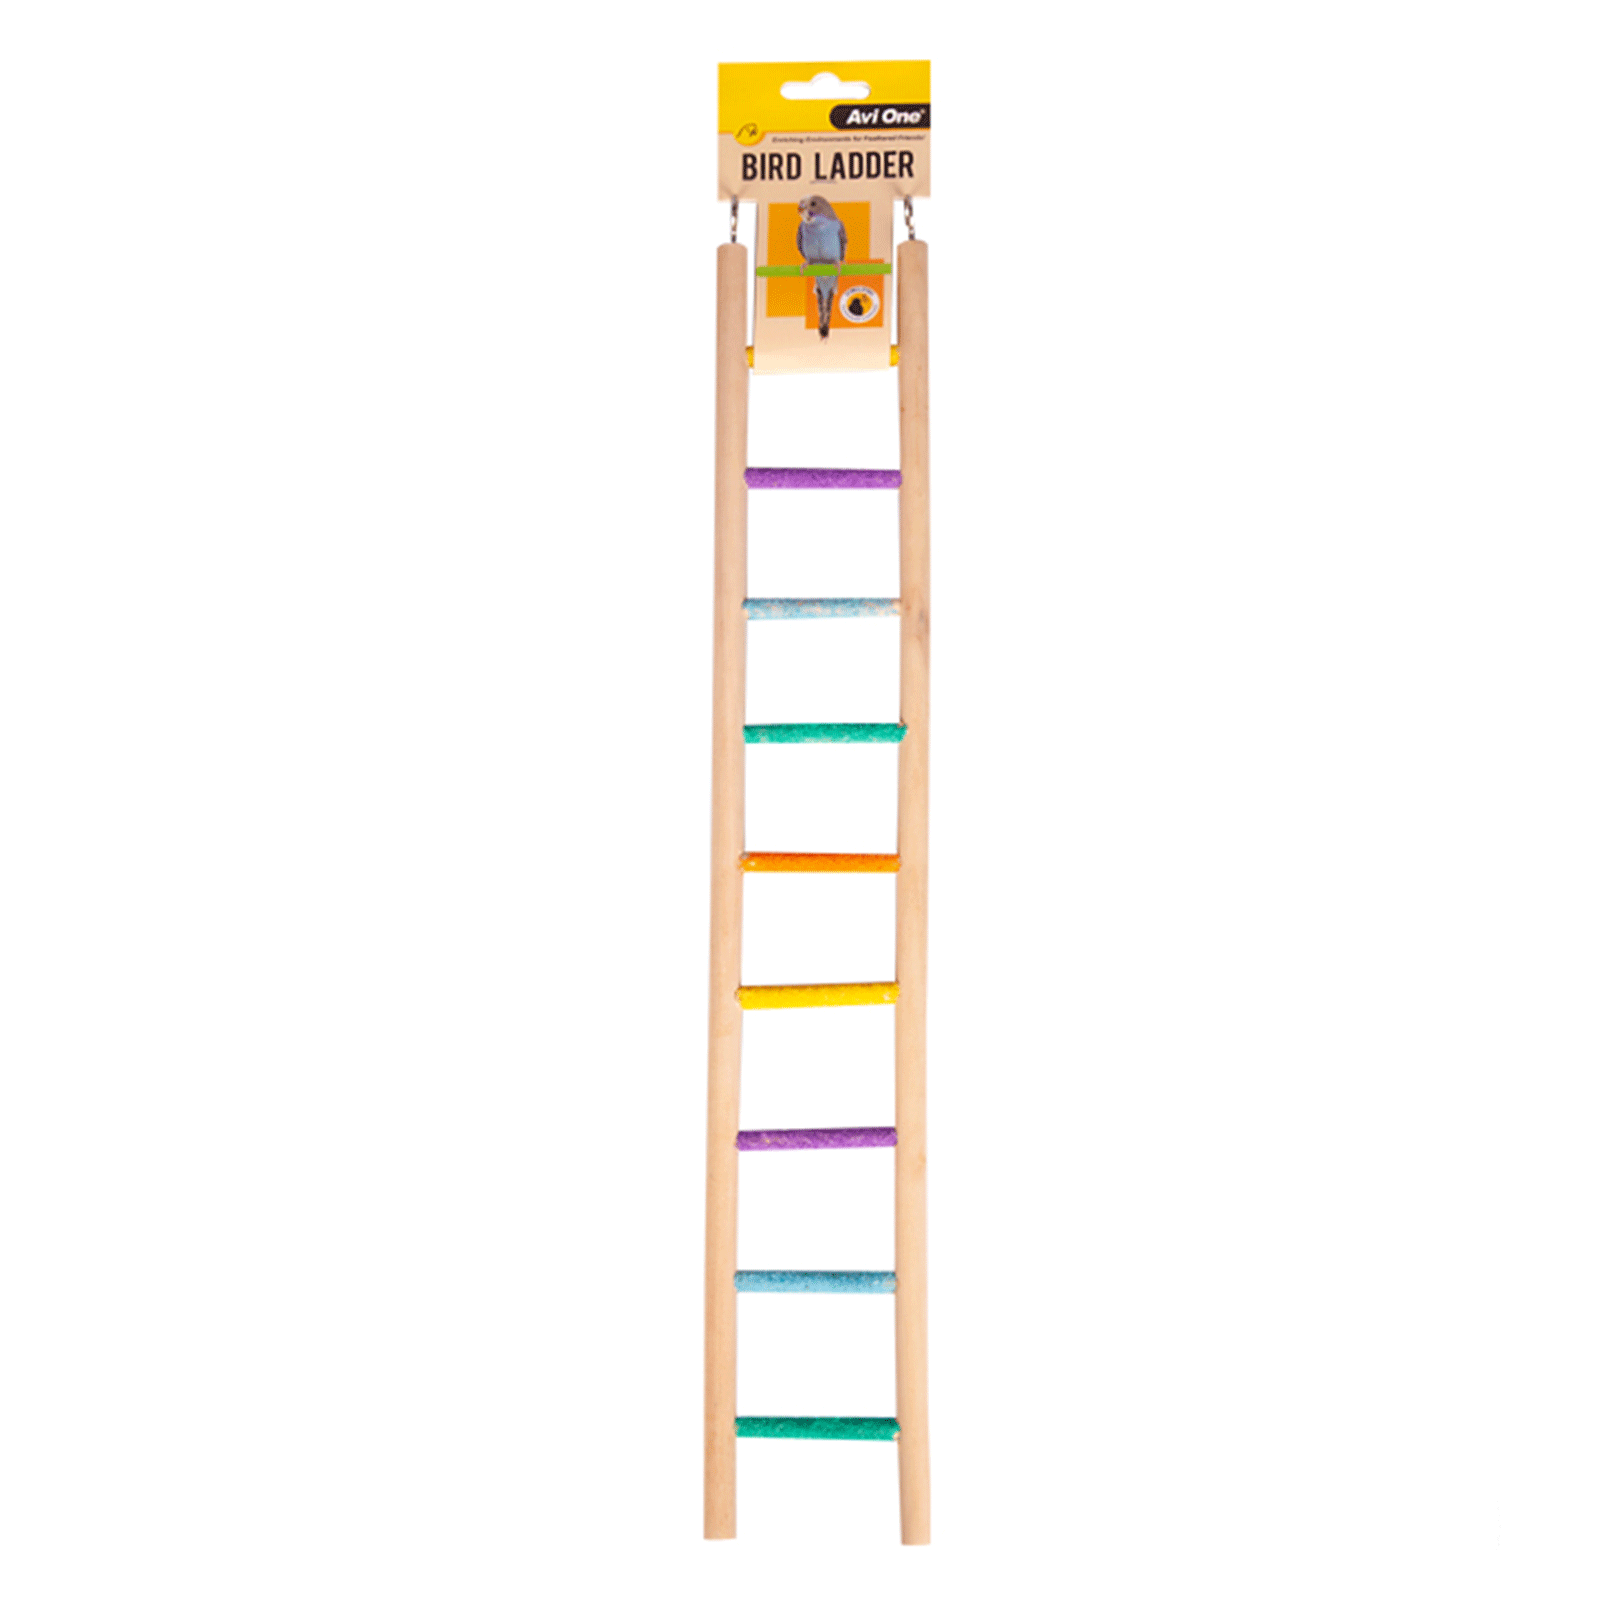 Avi One Bird Toy Ladder with Sand Steps